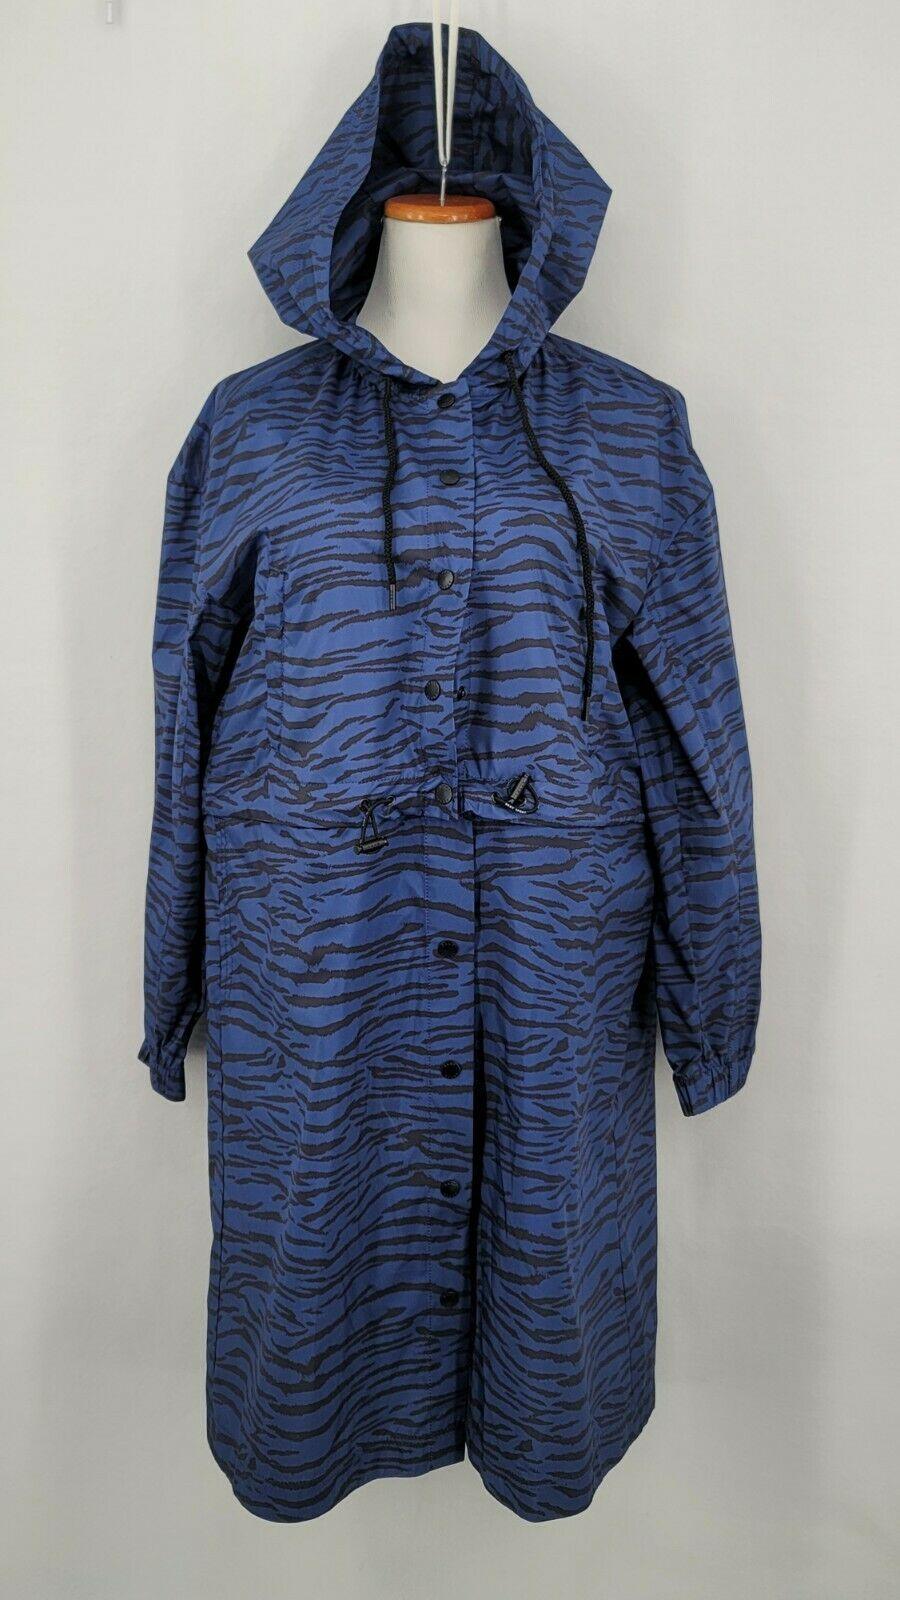 DKNY Womens Blue Convertible Raincoat Hooded Windbreaker Coat Jacket Size S - SVNYFancy